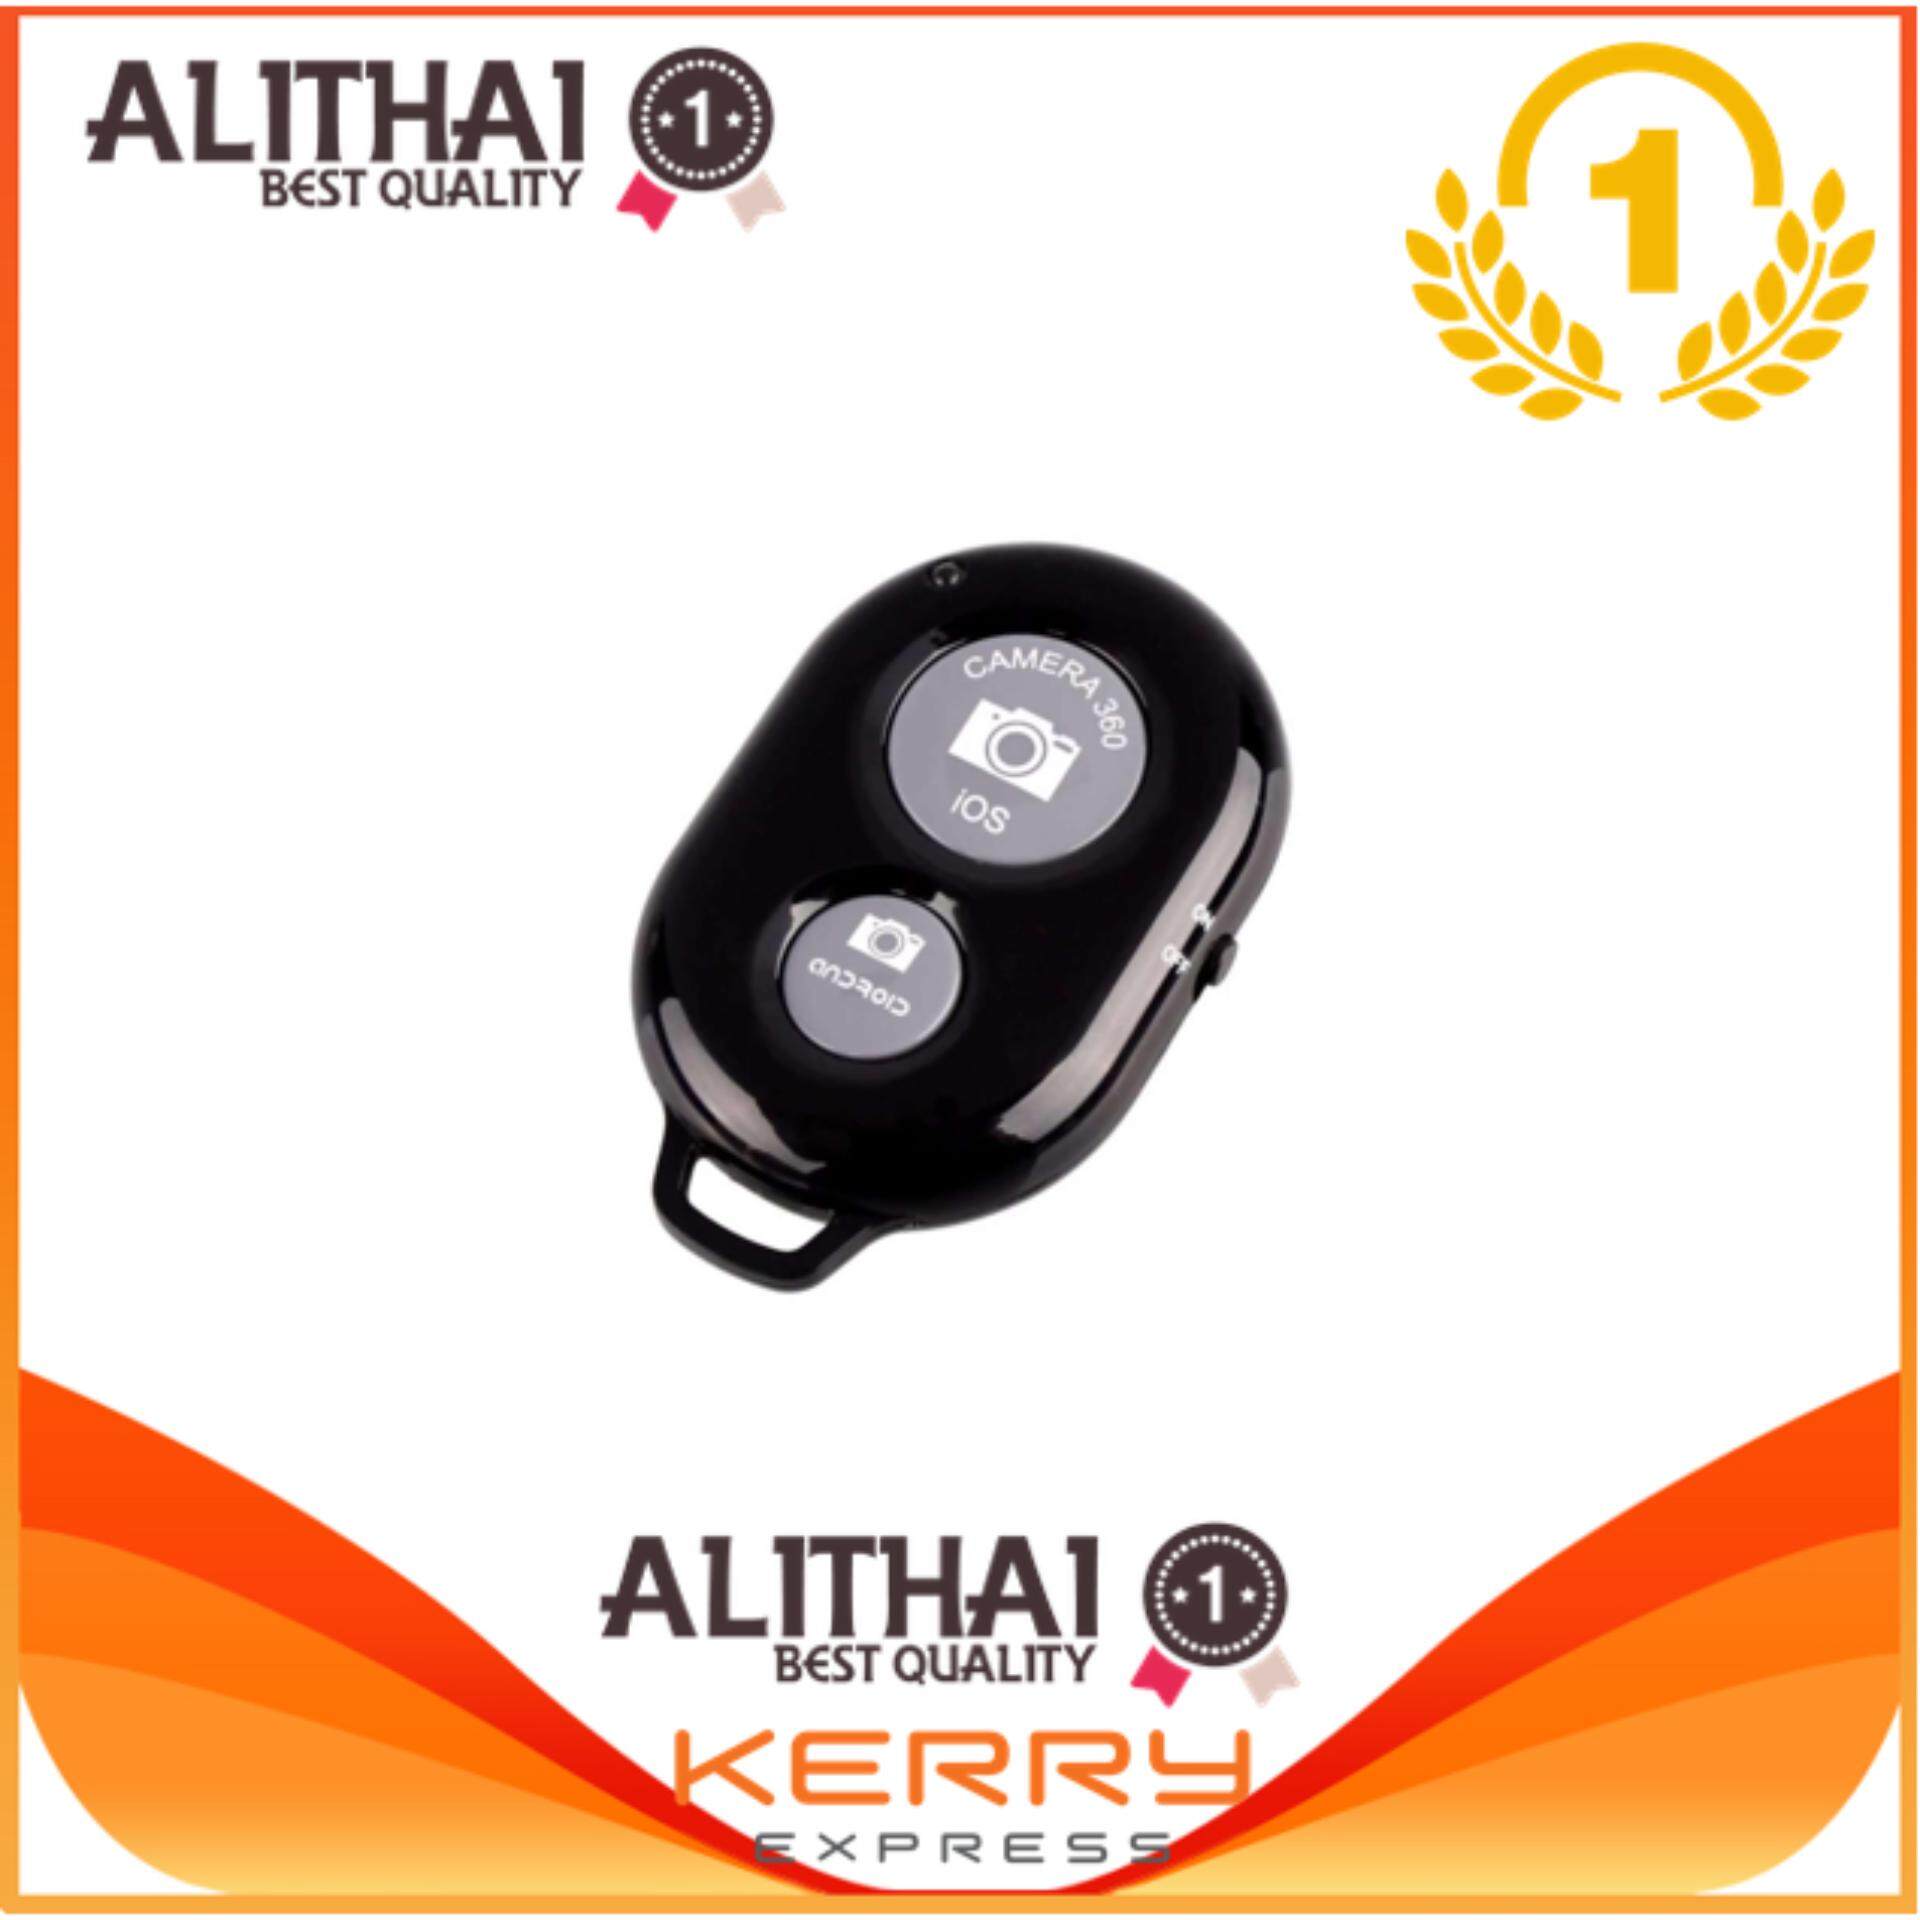 alithai AB Shutter3 Bluetooth รีโมทถ่ายรูป แบบไร้สาย